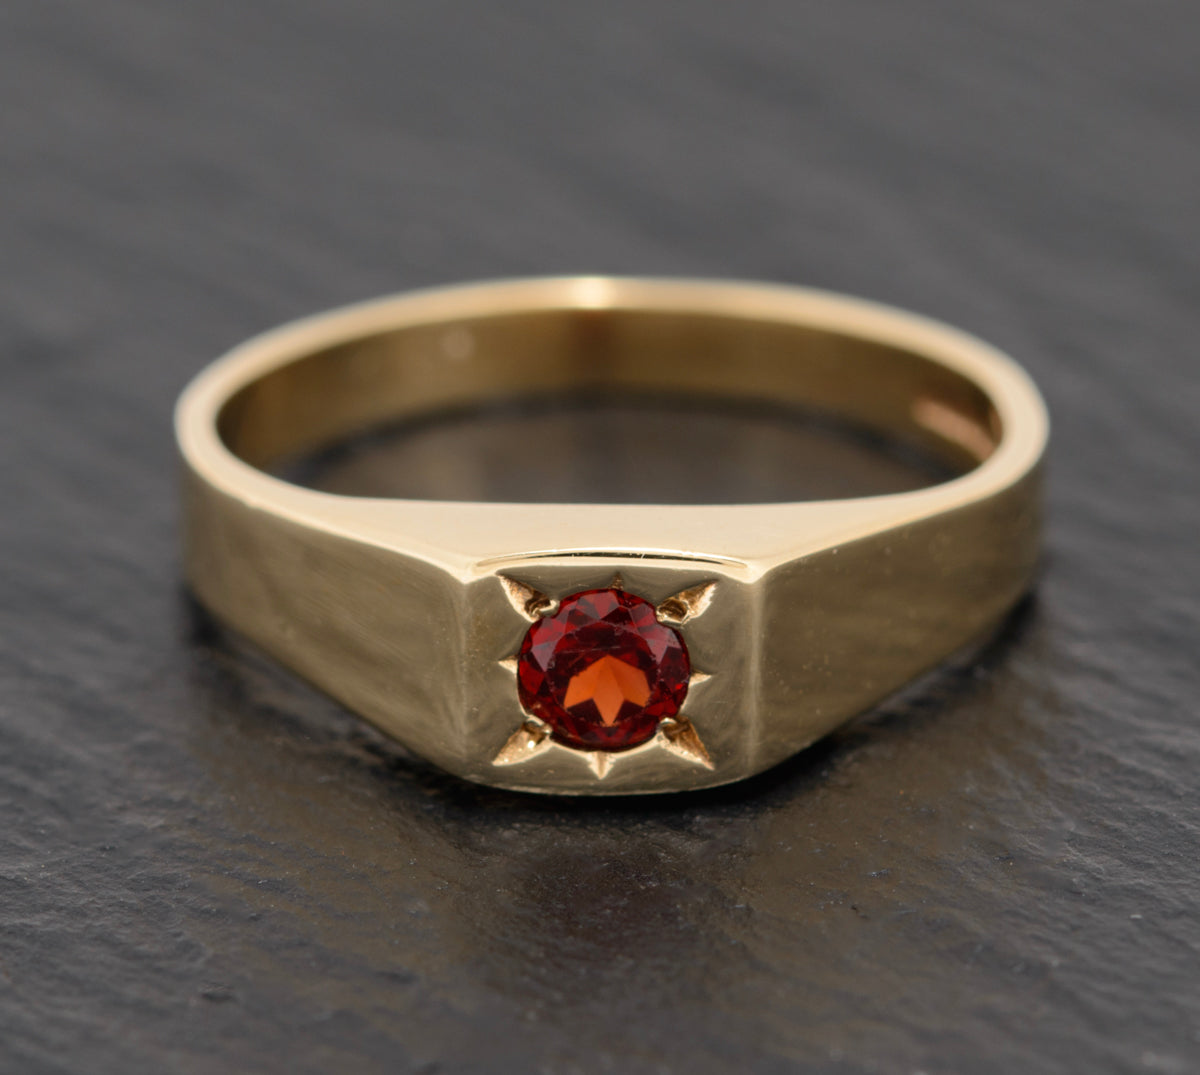 Vintage 9ct Gold Signet Ring Set With Round Facet Cut Garnet Gemstone (A1581)